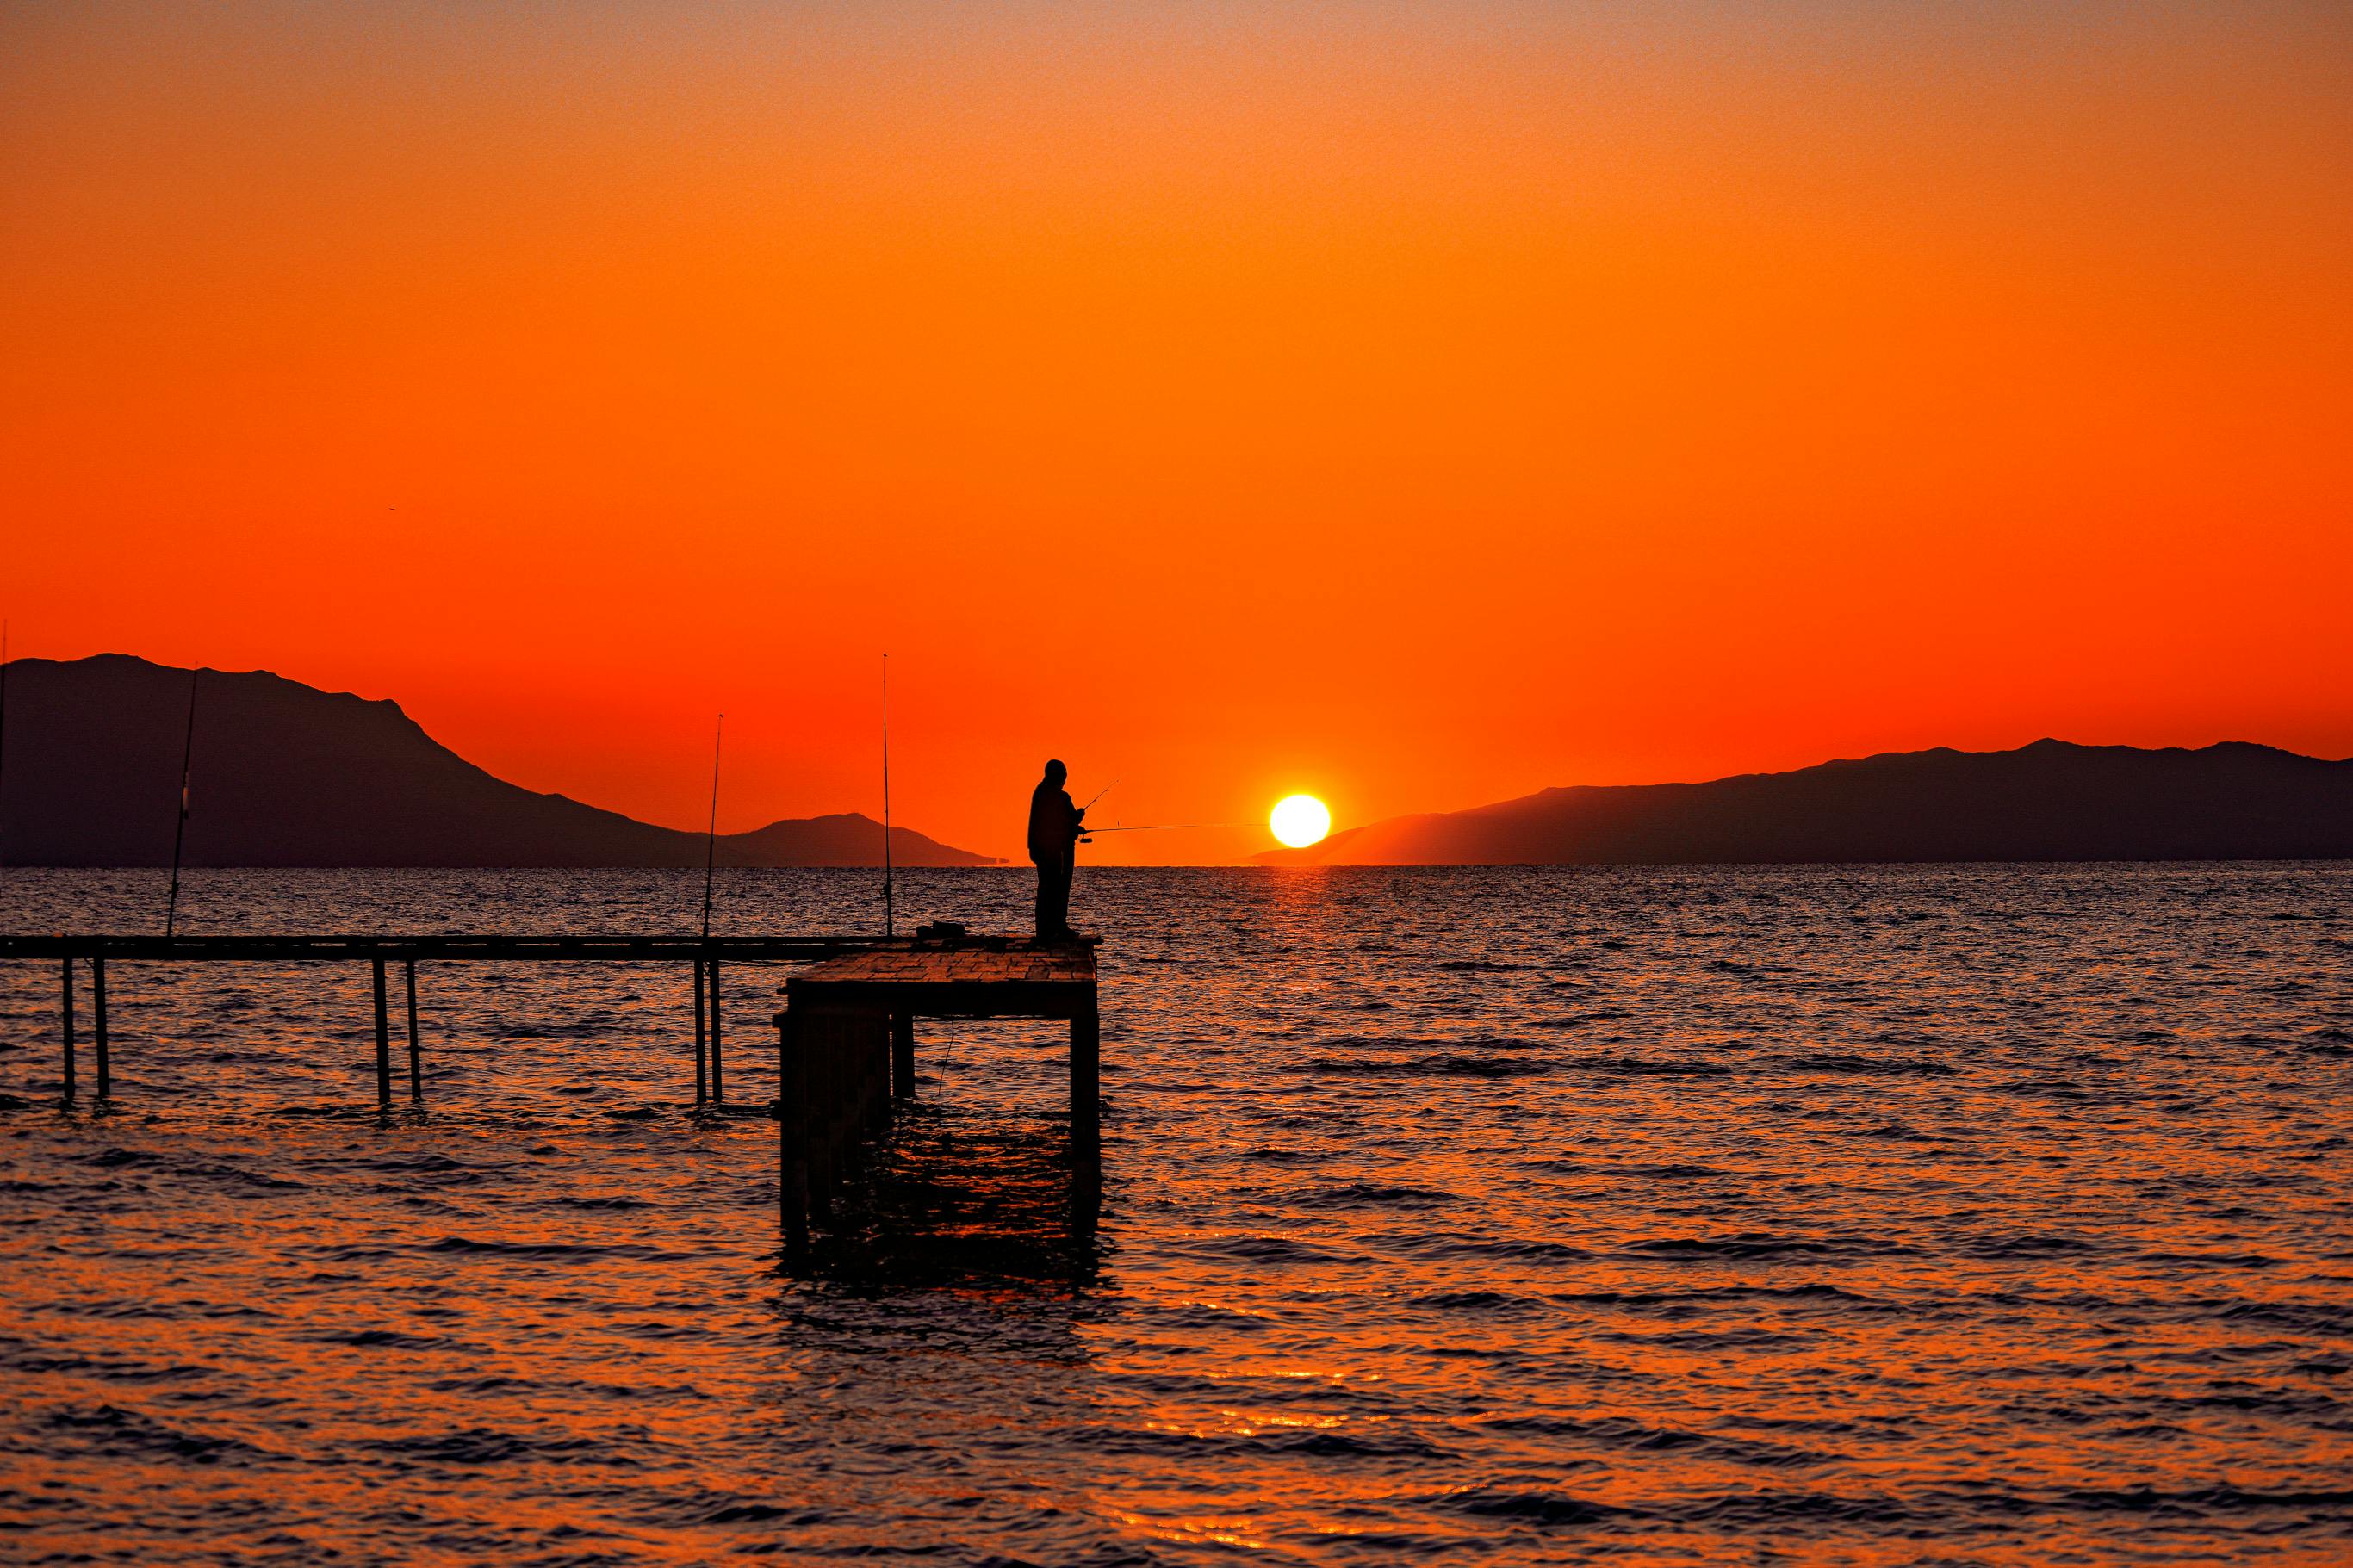 Man on Fishing Pier stock image. Image of sunset, harvey - 269720267